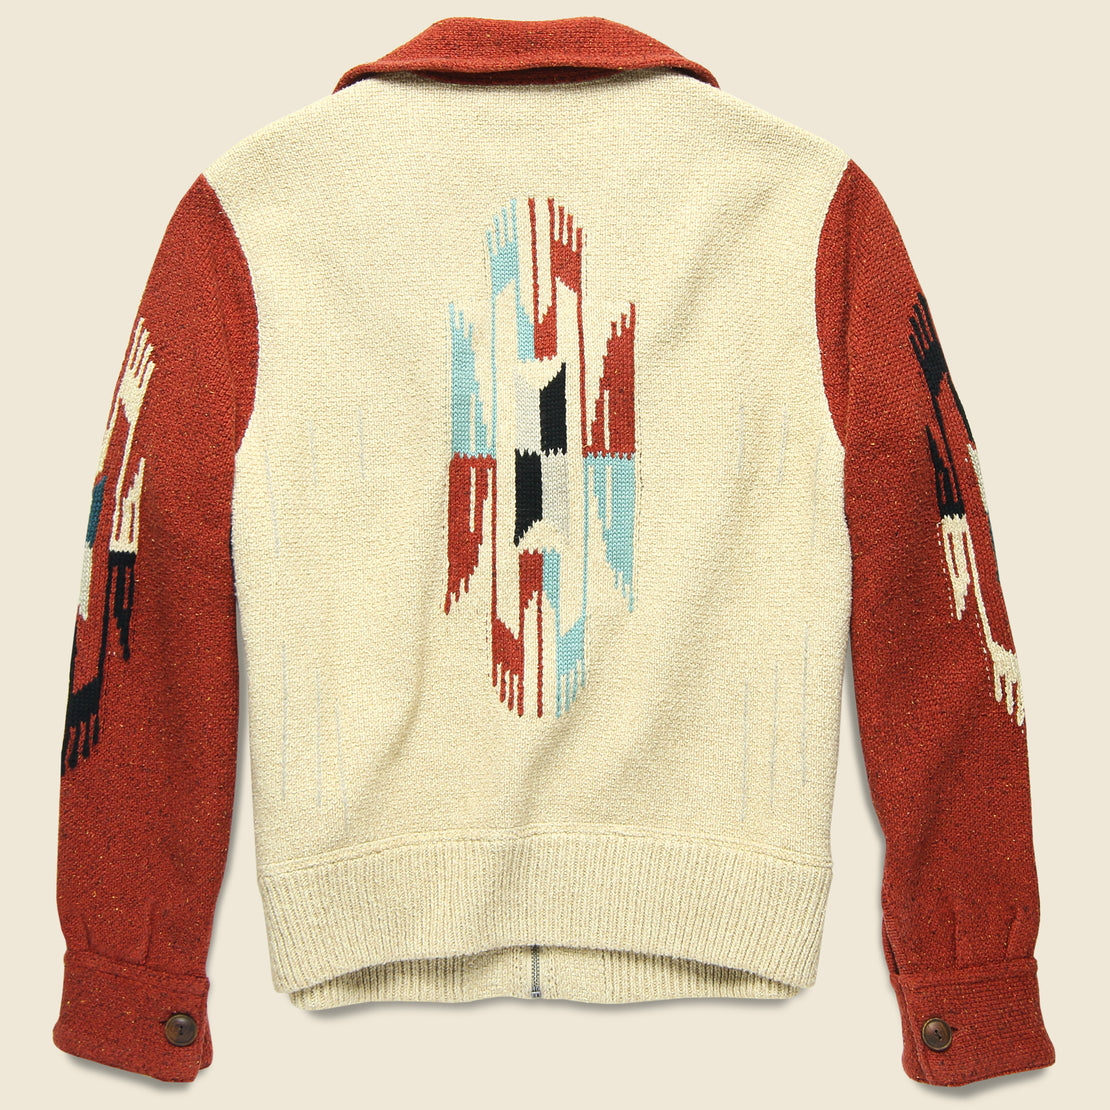 Chimayo Sweater Jacket - Rust/Cream/Sky Blue